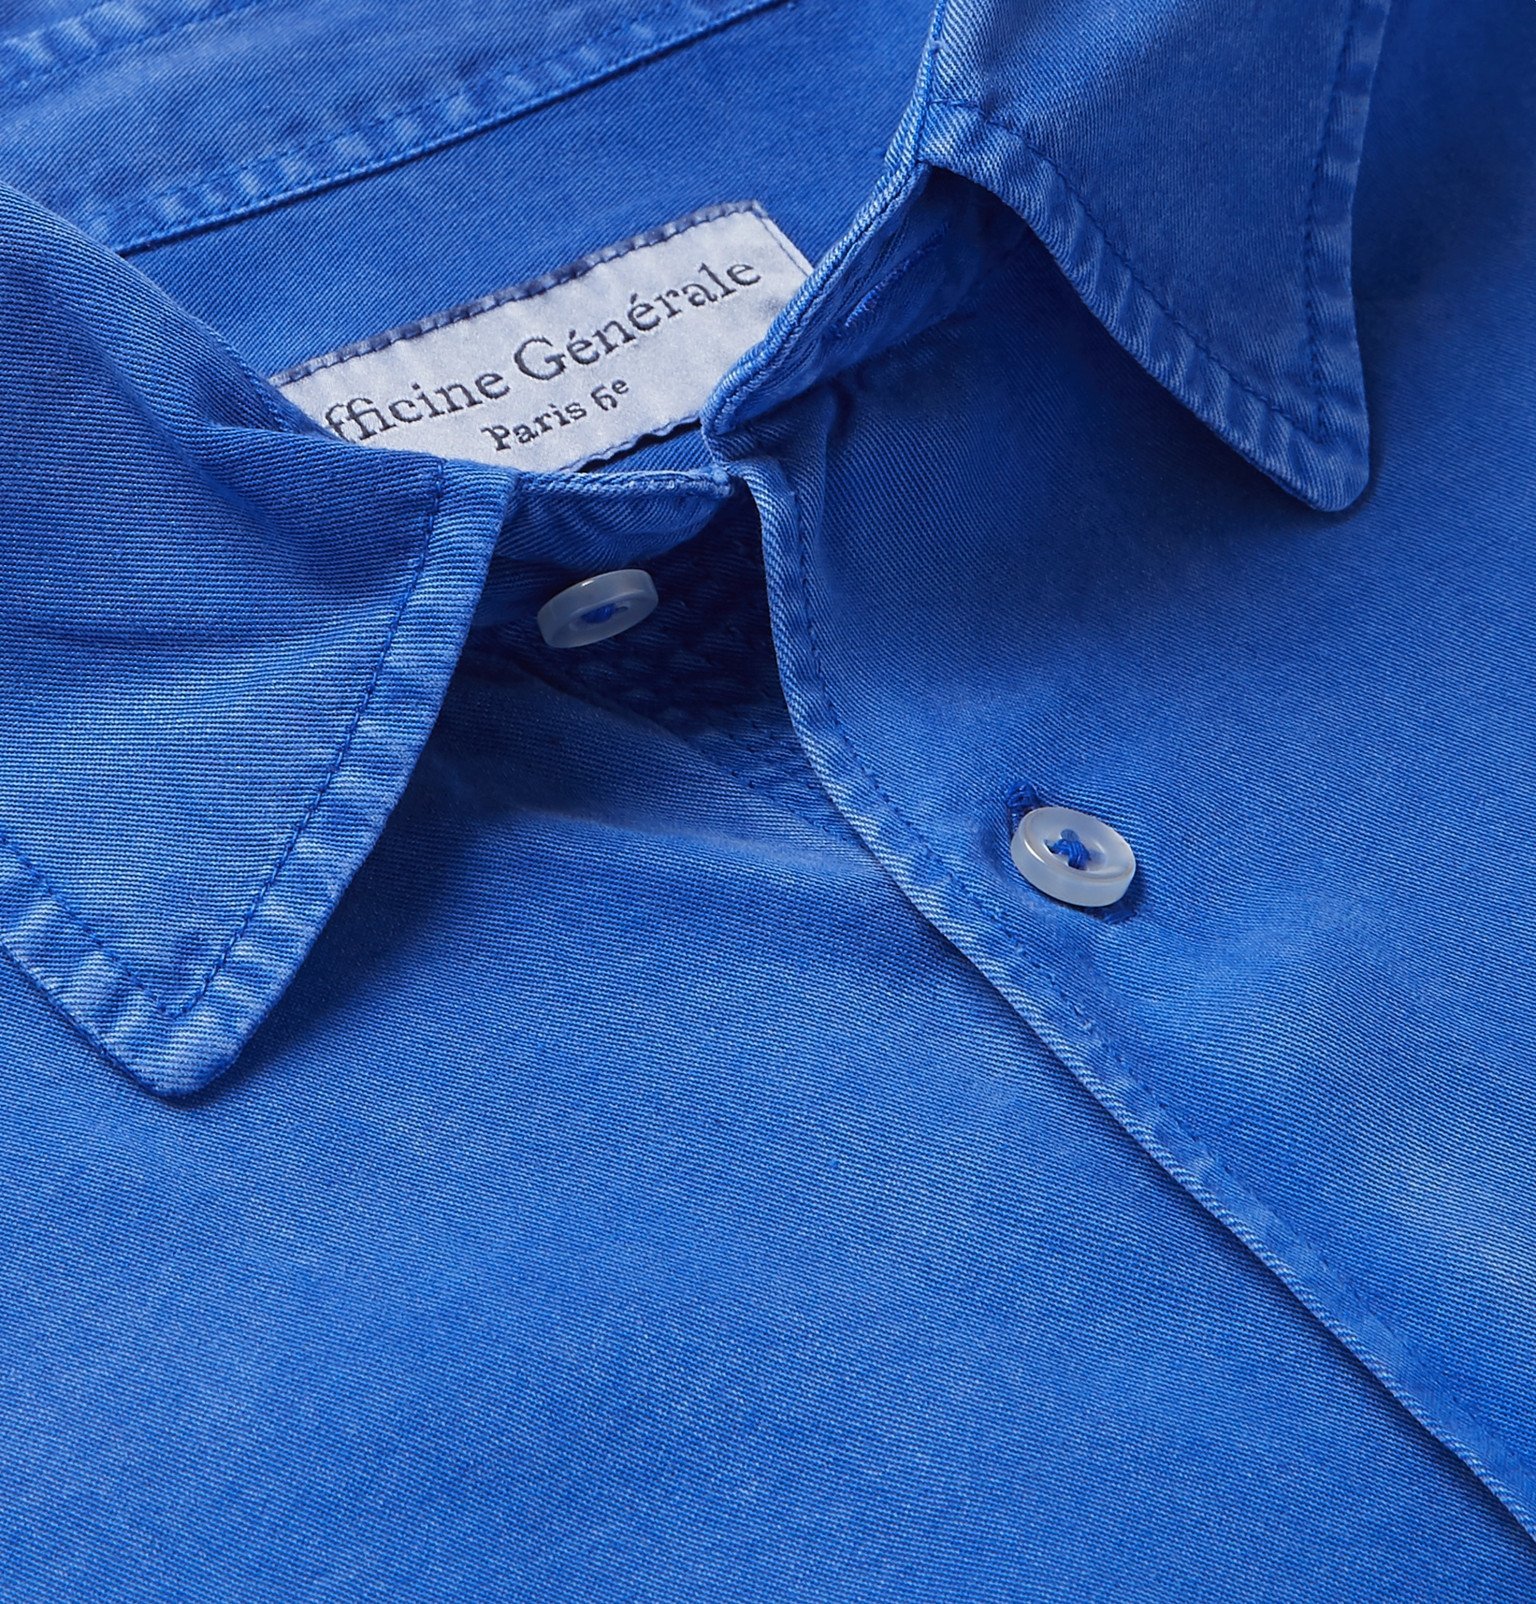 Officine Generale - Benoit Pigment-Dyed Lyocell Shirt - Blue Officine ...